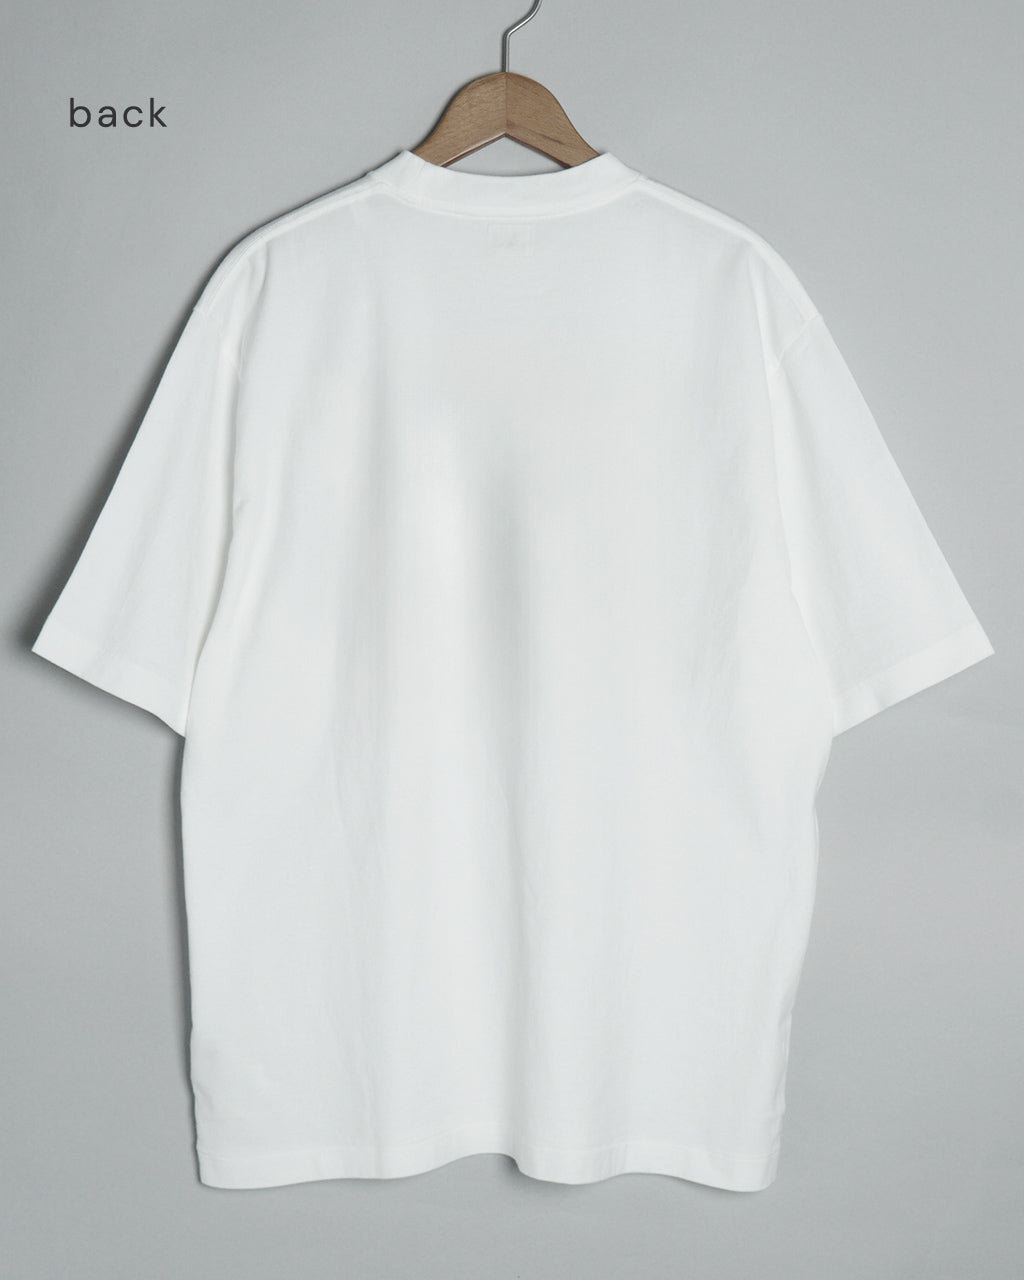 blurhms ROOTSTOCK ブラームス ルーツストックプリント Tシャツ Sunburst Print Tee STANDARD【送料無料】正規取扱店【お一人様、1点ずつまで】